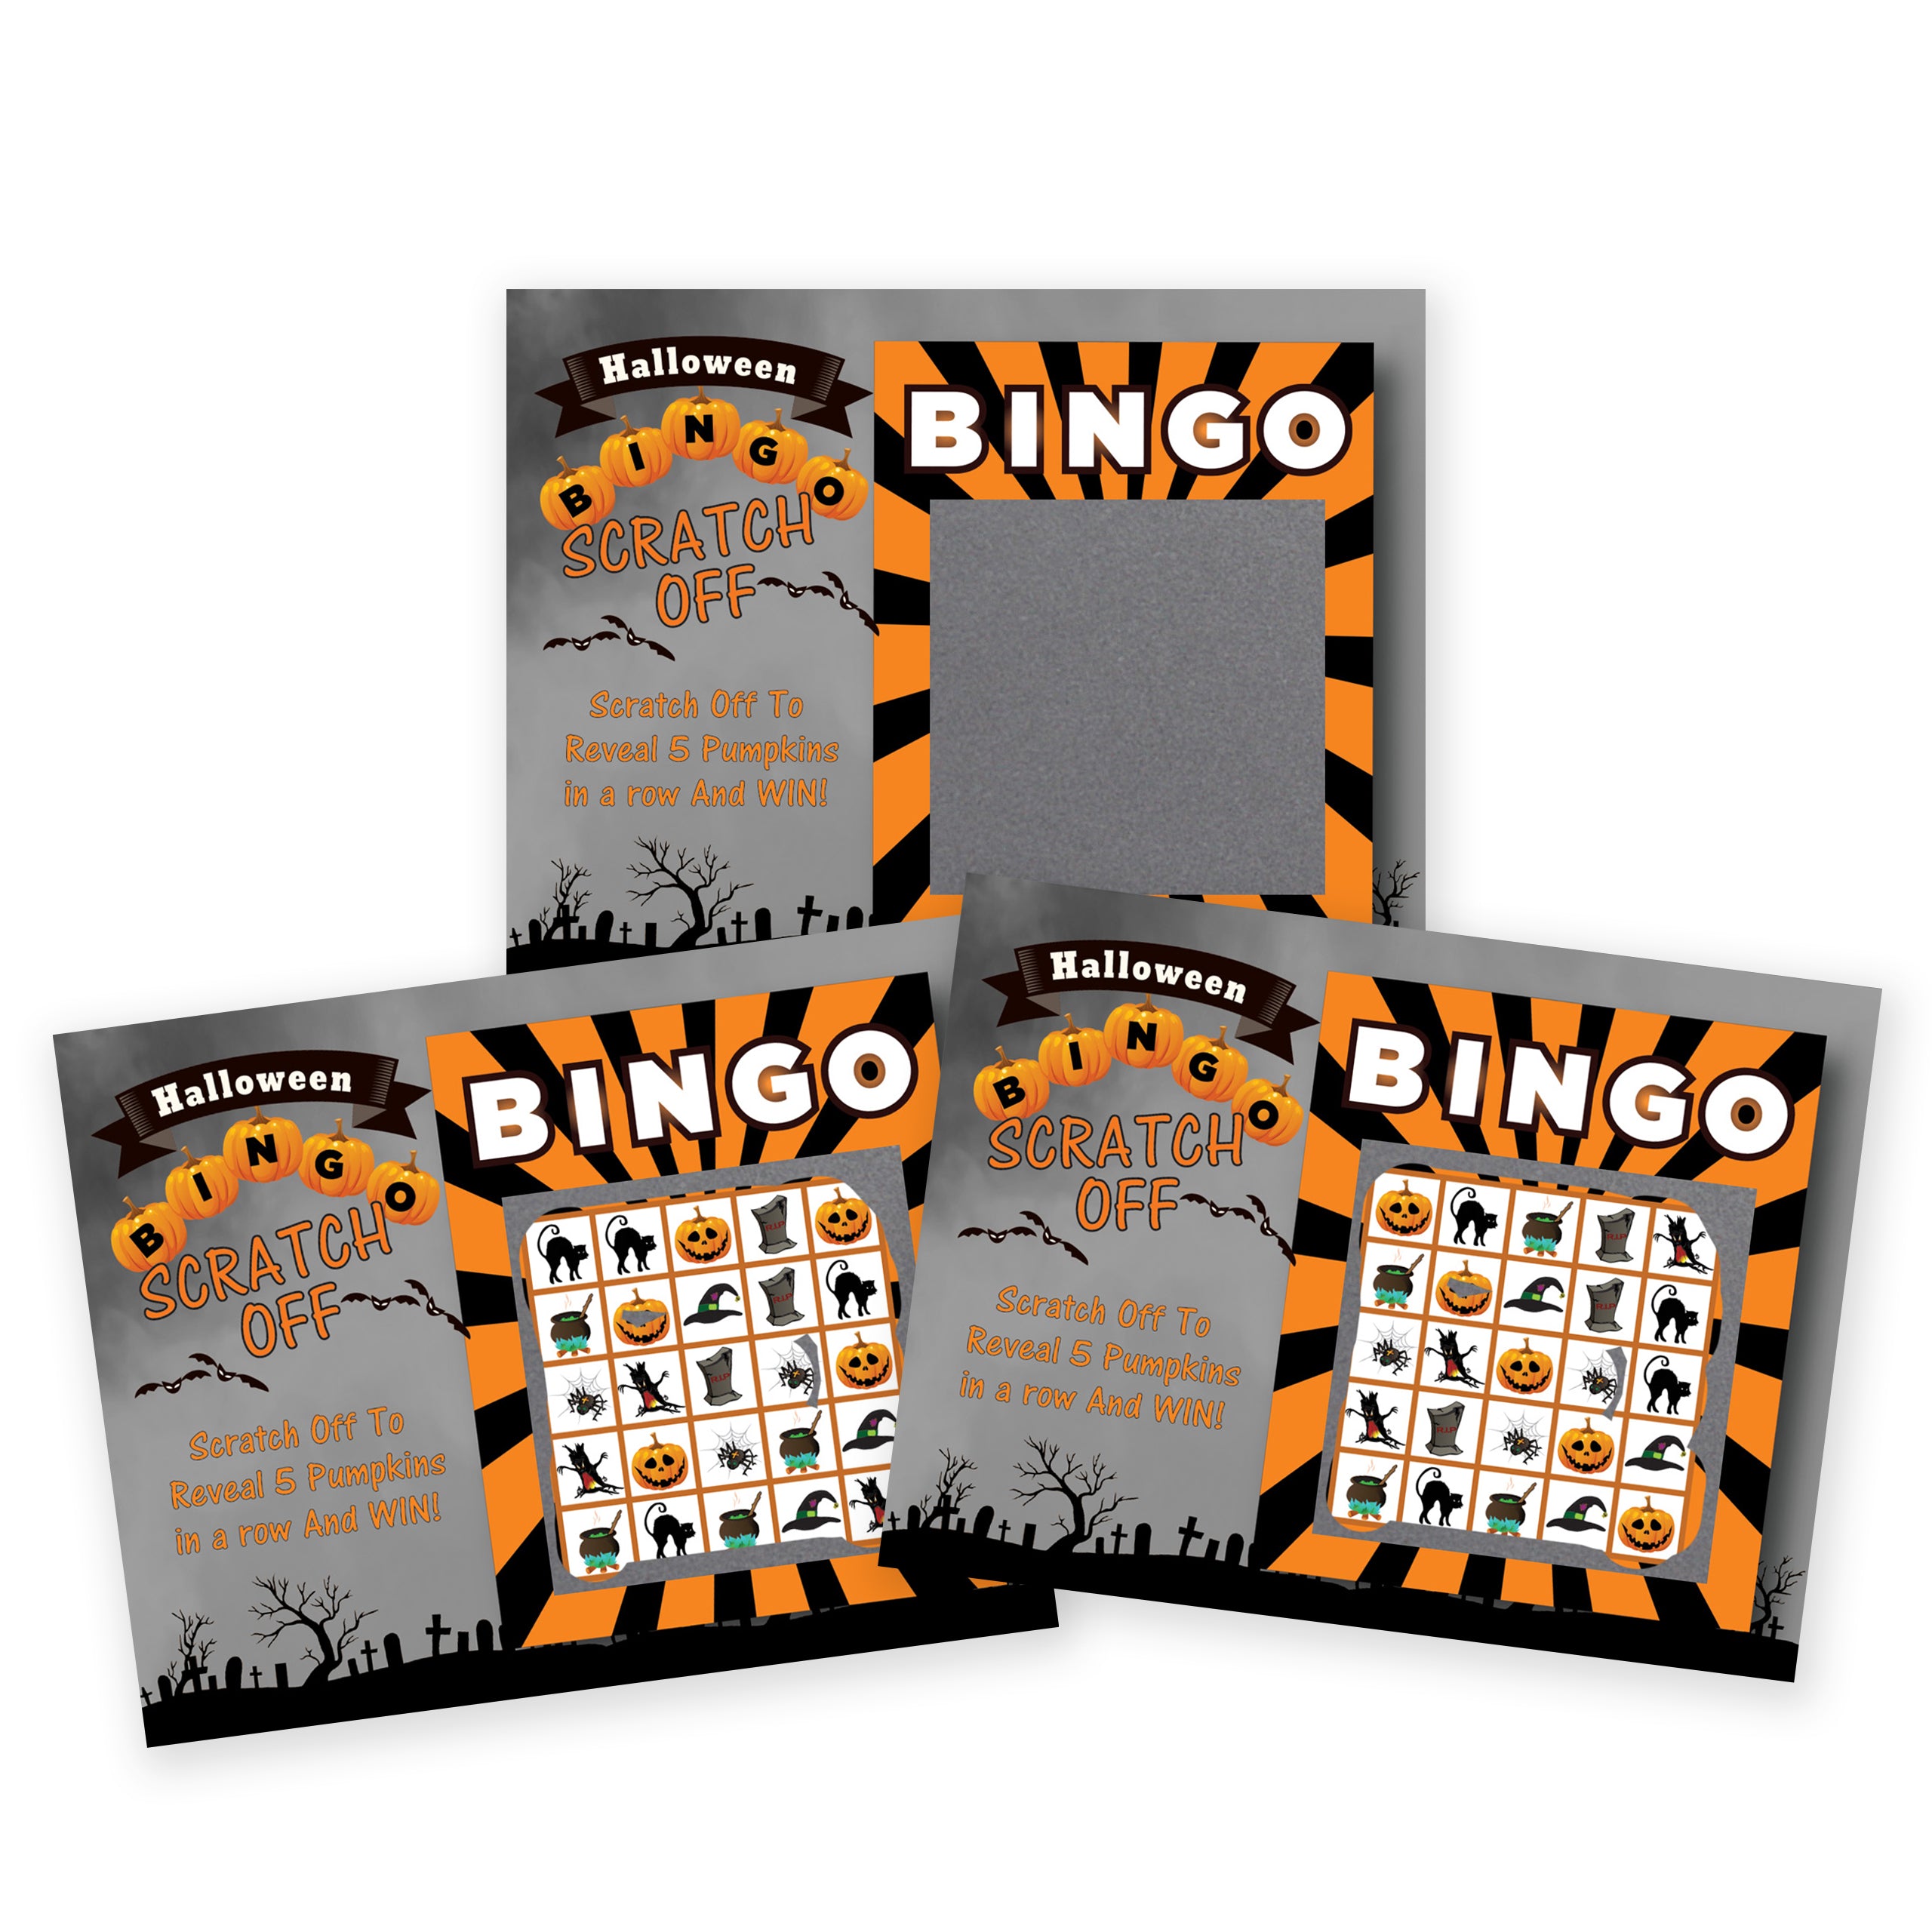 Halloween BINGO Scratch Off Game 26 Pack - 2 Bingo and 24 Non-Bingo Cards